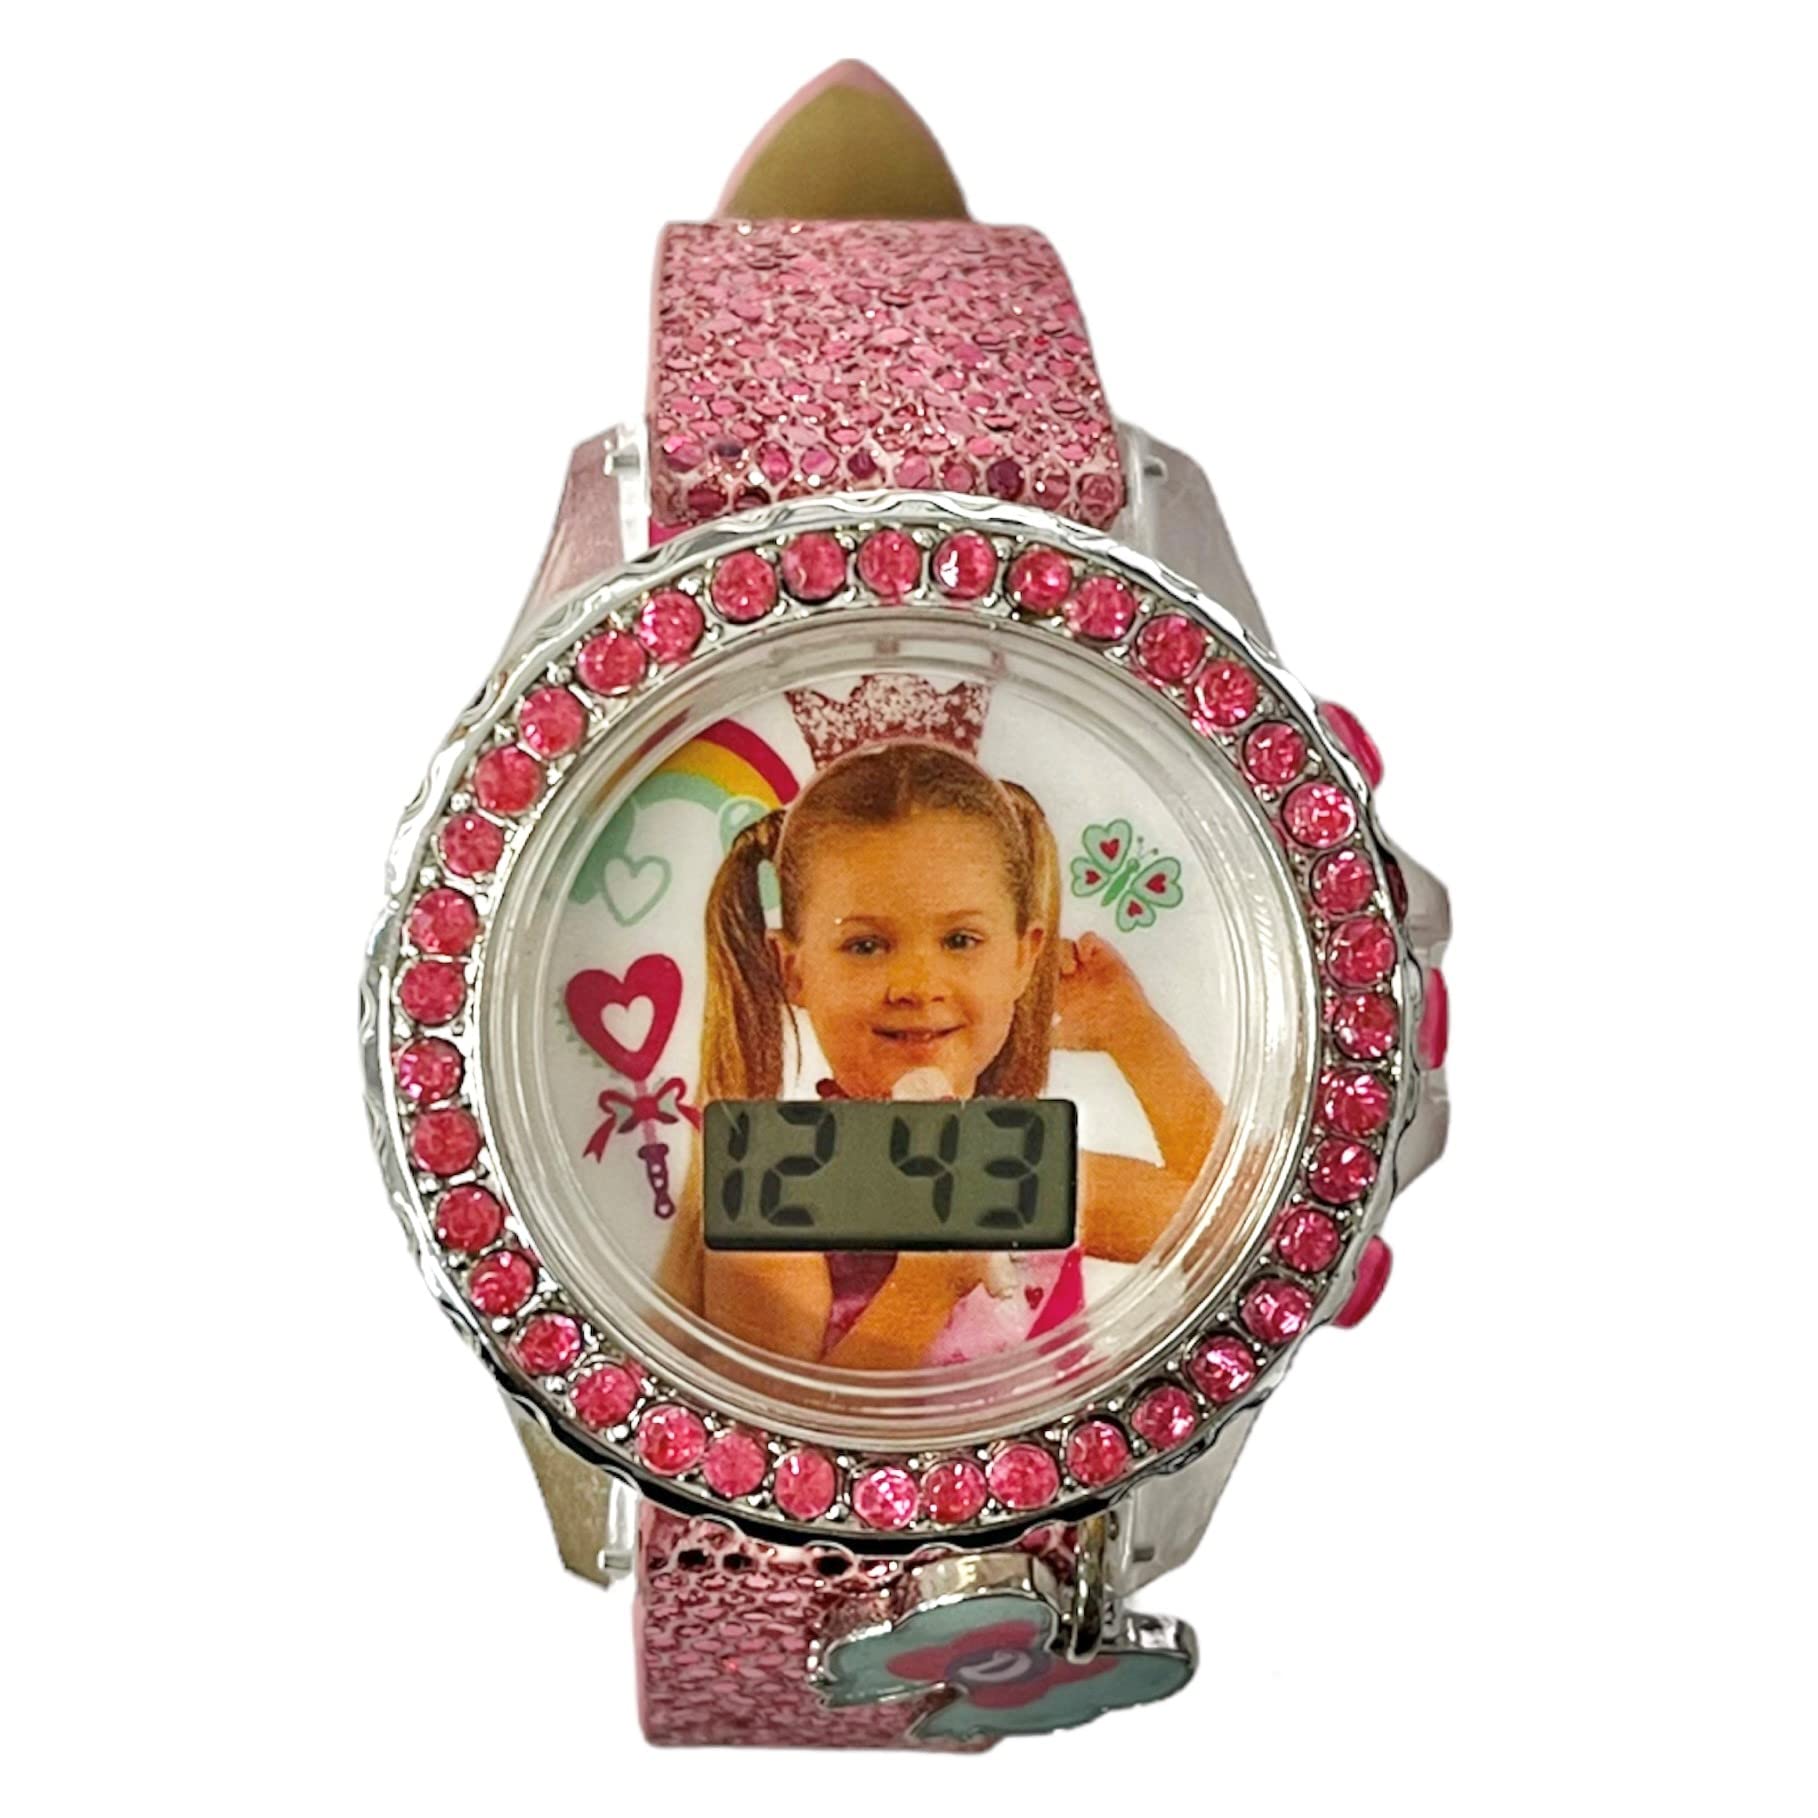 Accutime Kids Love, Diana Show Digital Quartz Pink Wrist Watch with Hanging Charm, Silver Bezel, Rhinestones, Pink Glitter Strap for Girls and Boys with Flashing LED Lights (Model: LDA4011AZ)